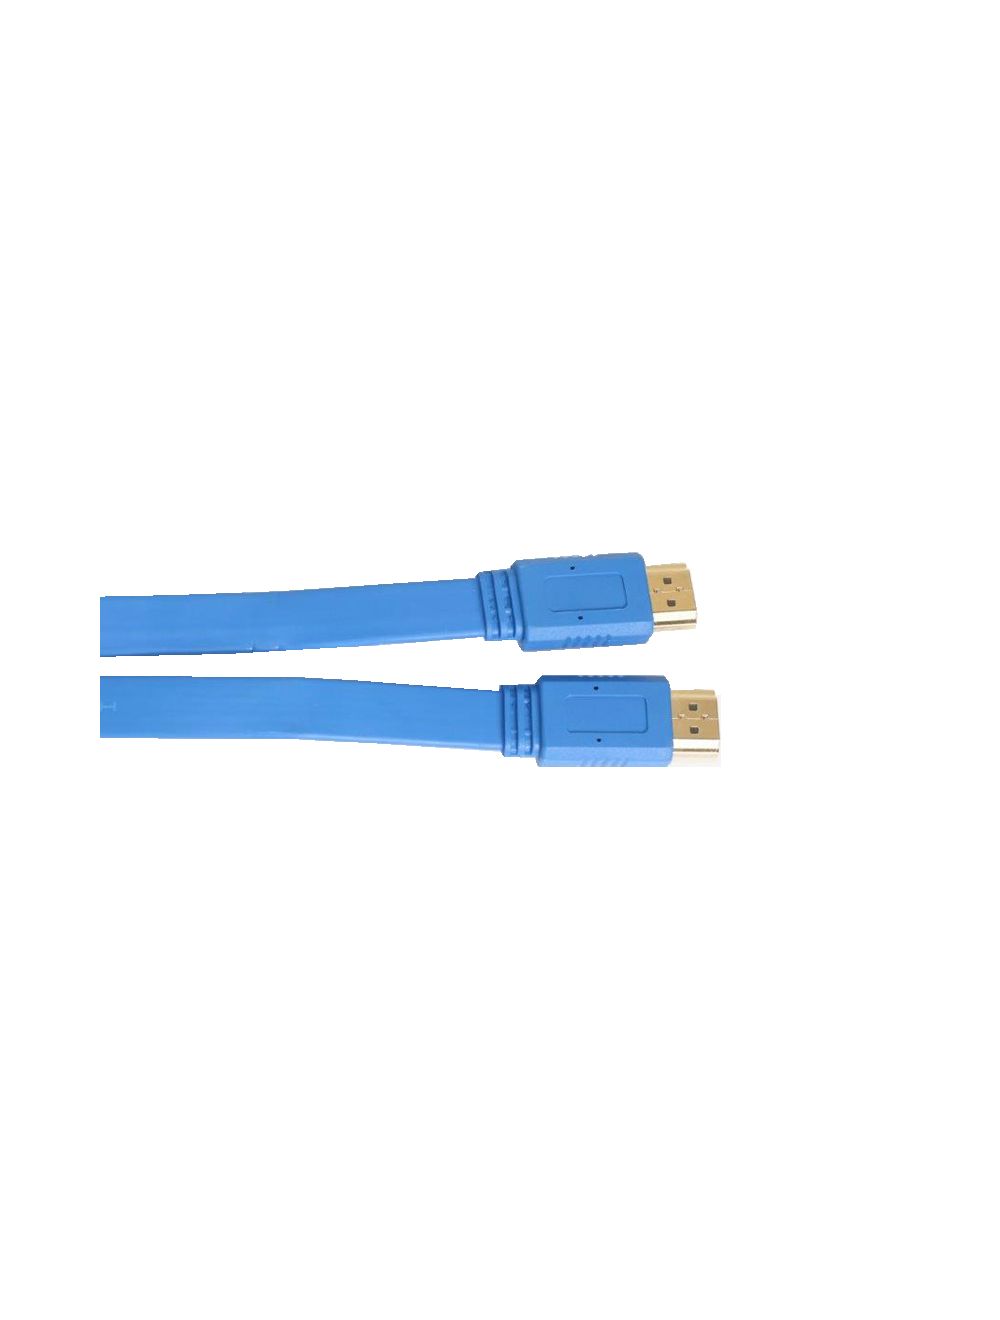 Etrain HDMI Cable, Blue - CV892